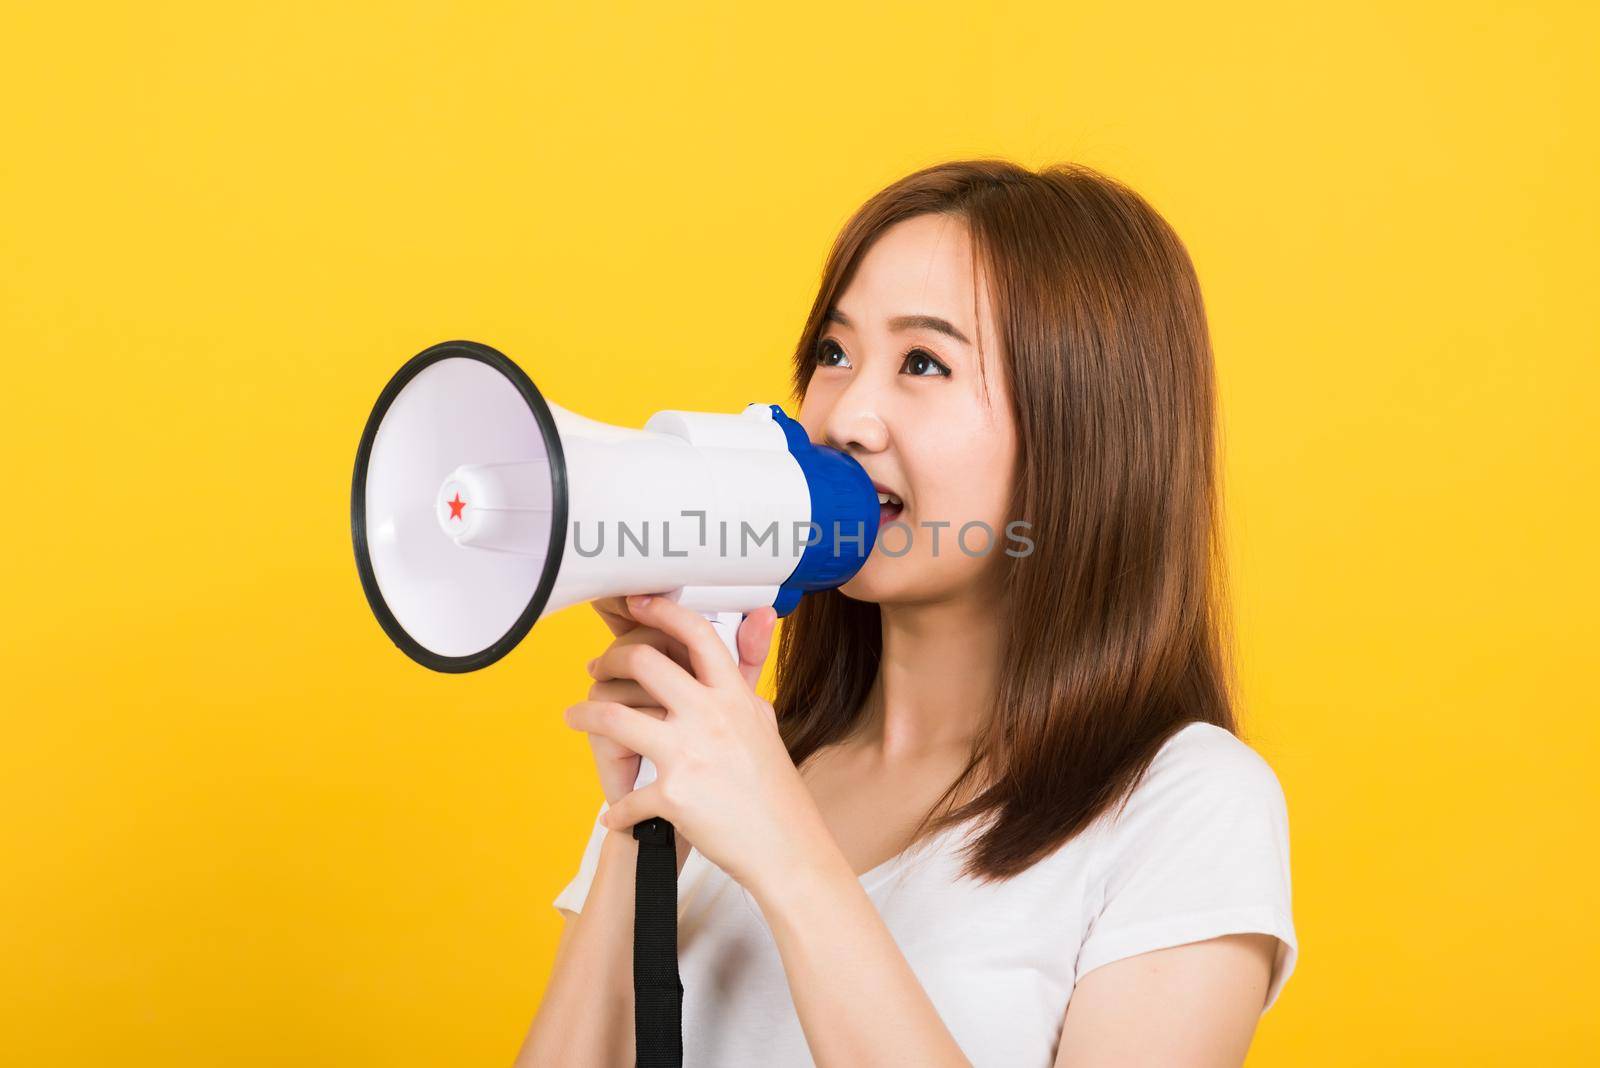 woman teen standing making announcement message shouting screaming in megaphone by Sorapop